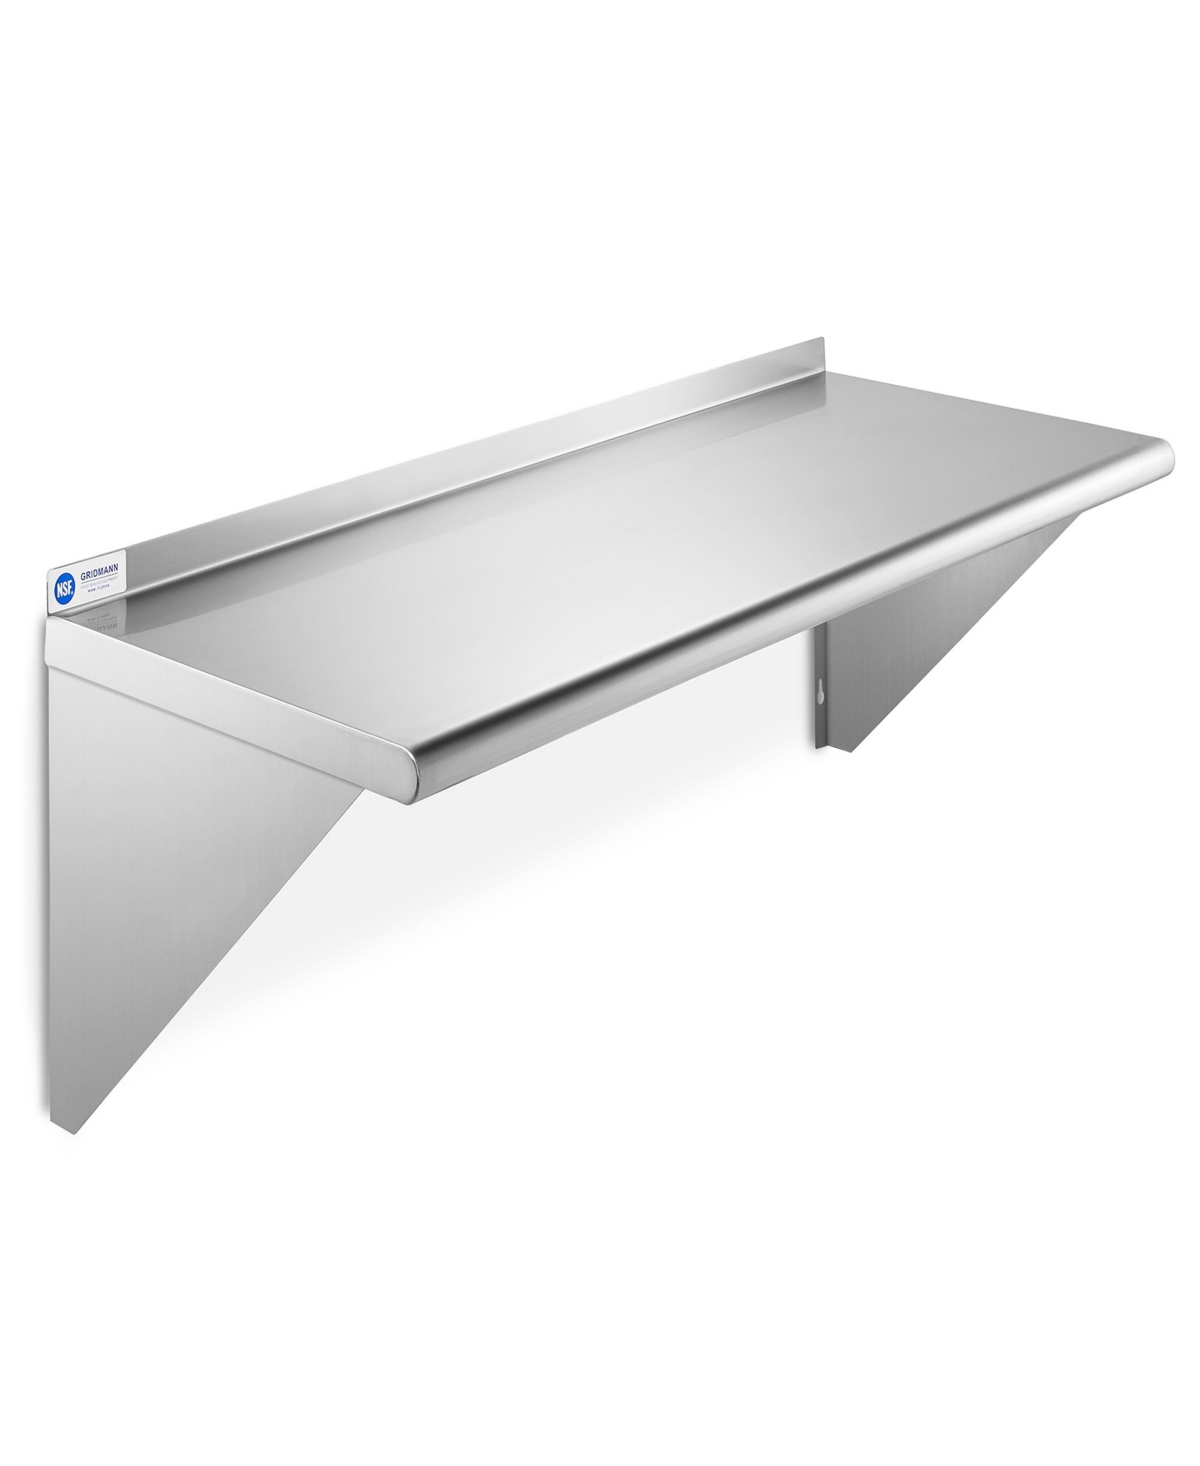 18" x 36" Nsf Stainless Steel Kitchen Wall Mount Shelf w/ Backsplash - Silver